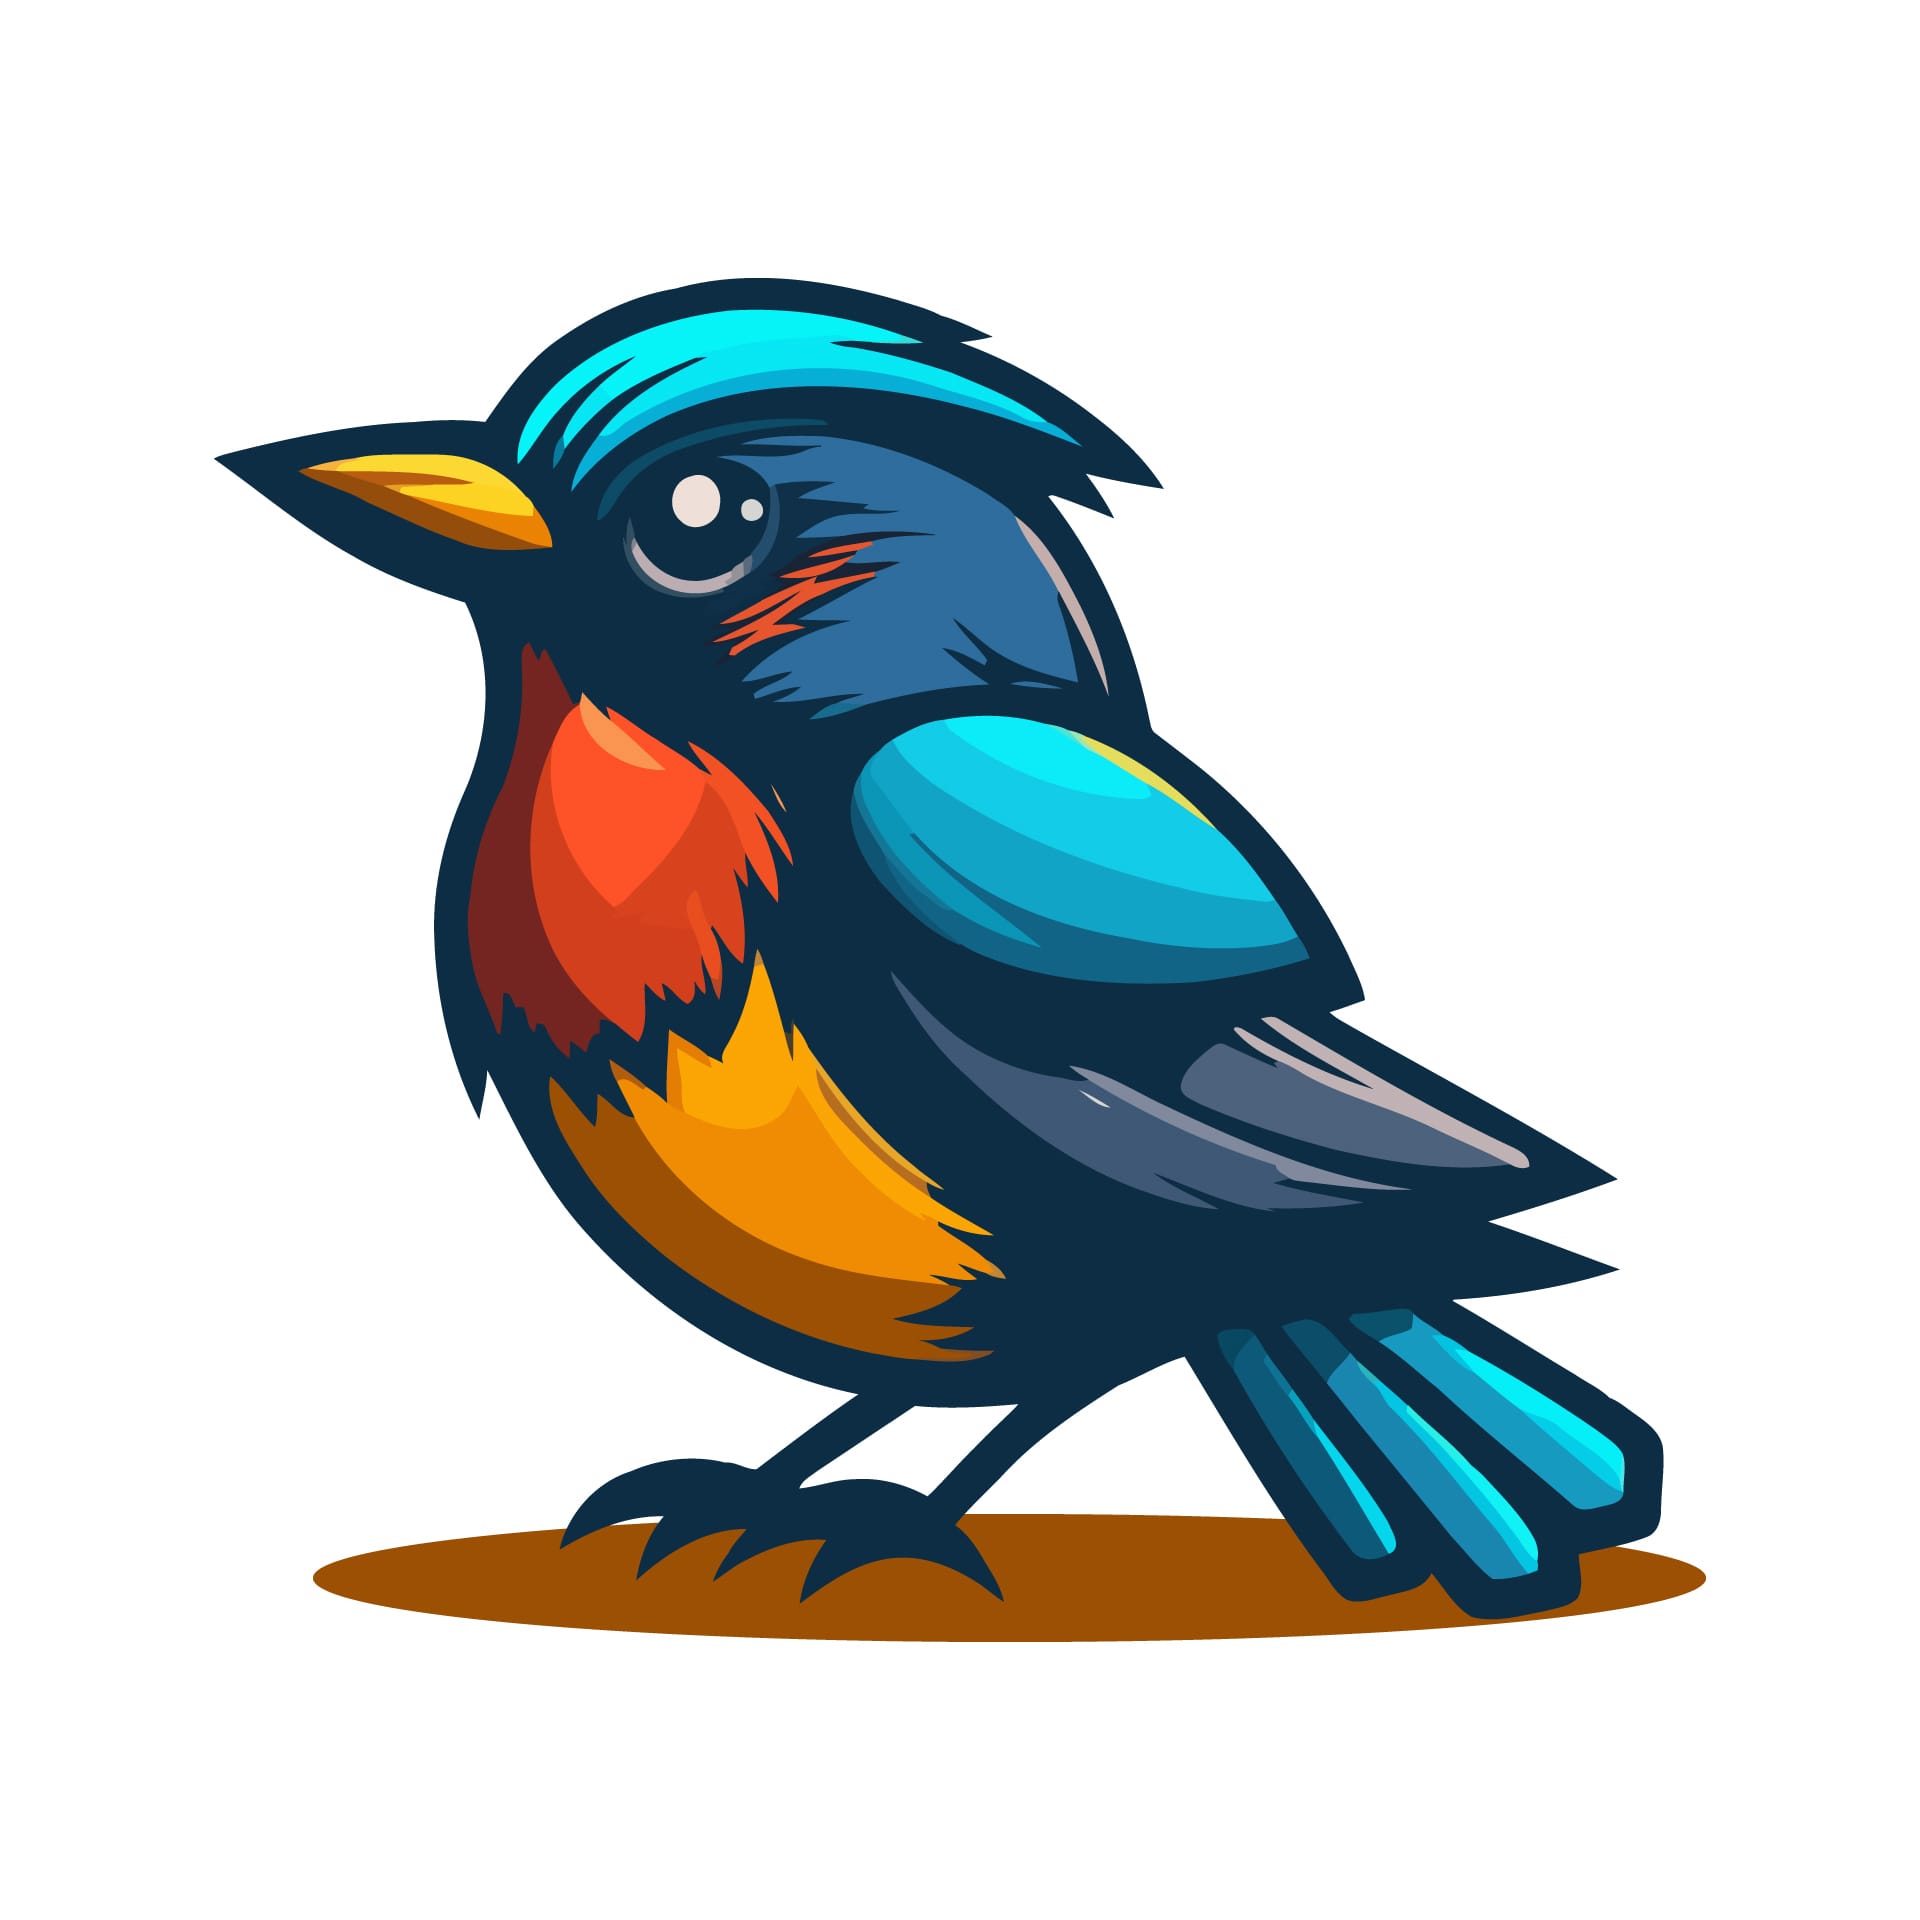 Little bird cartoon animal illustration logo mascot icon colorful image